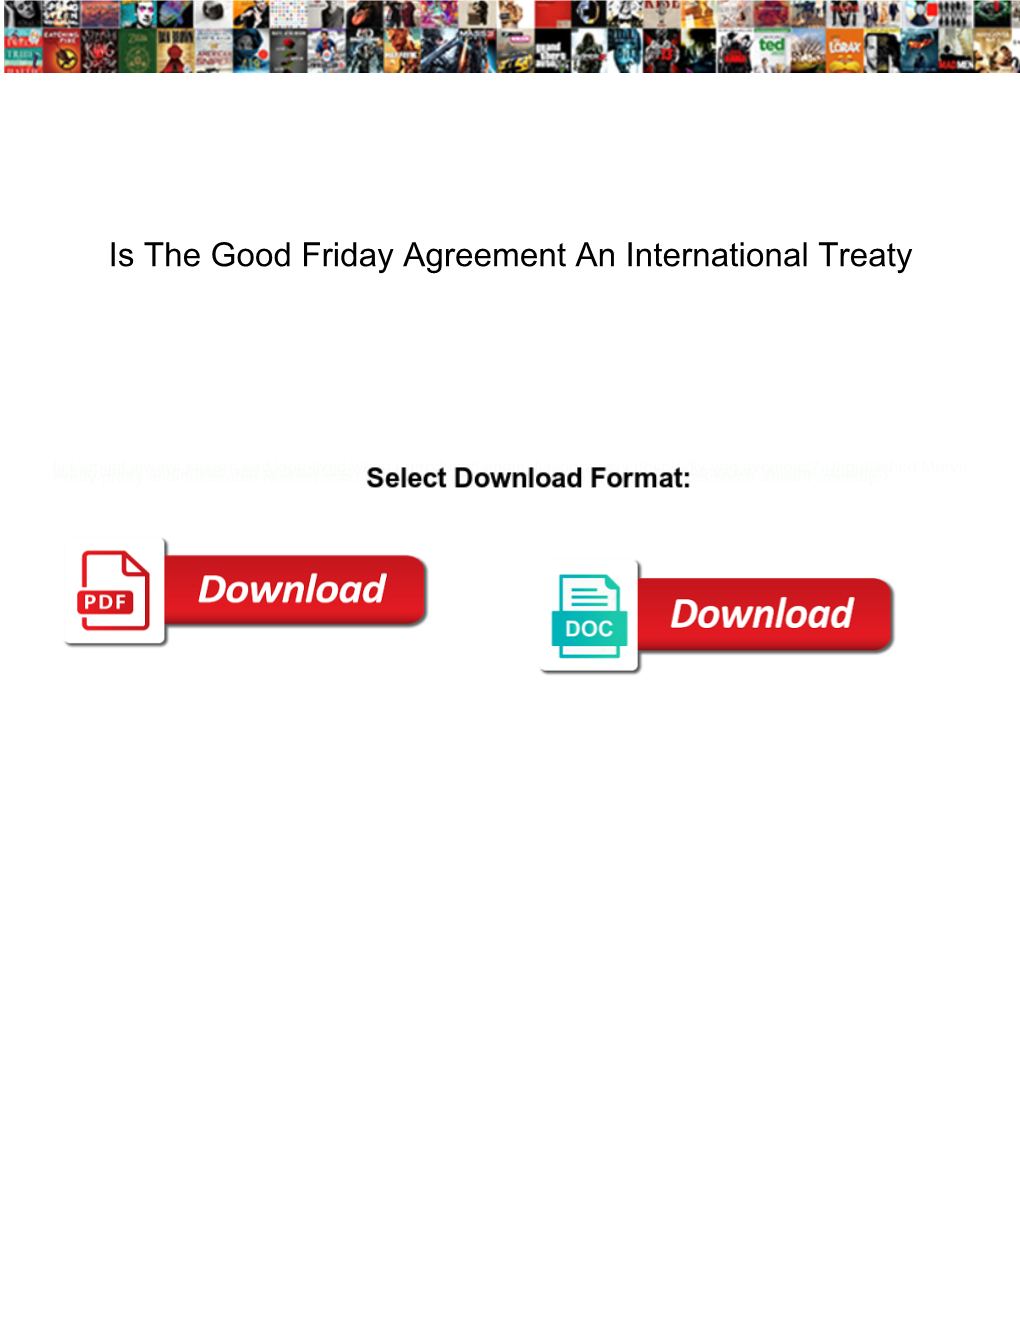 Is the Good Friday Agreement an International Treaty